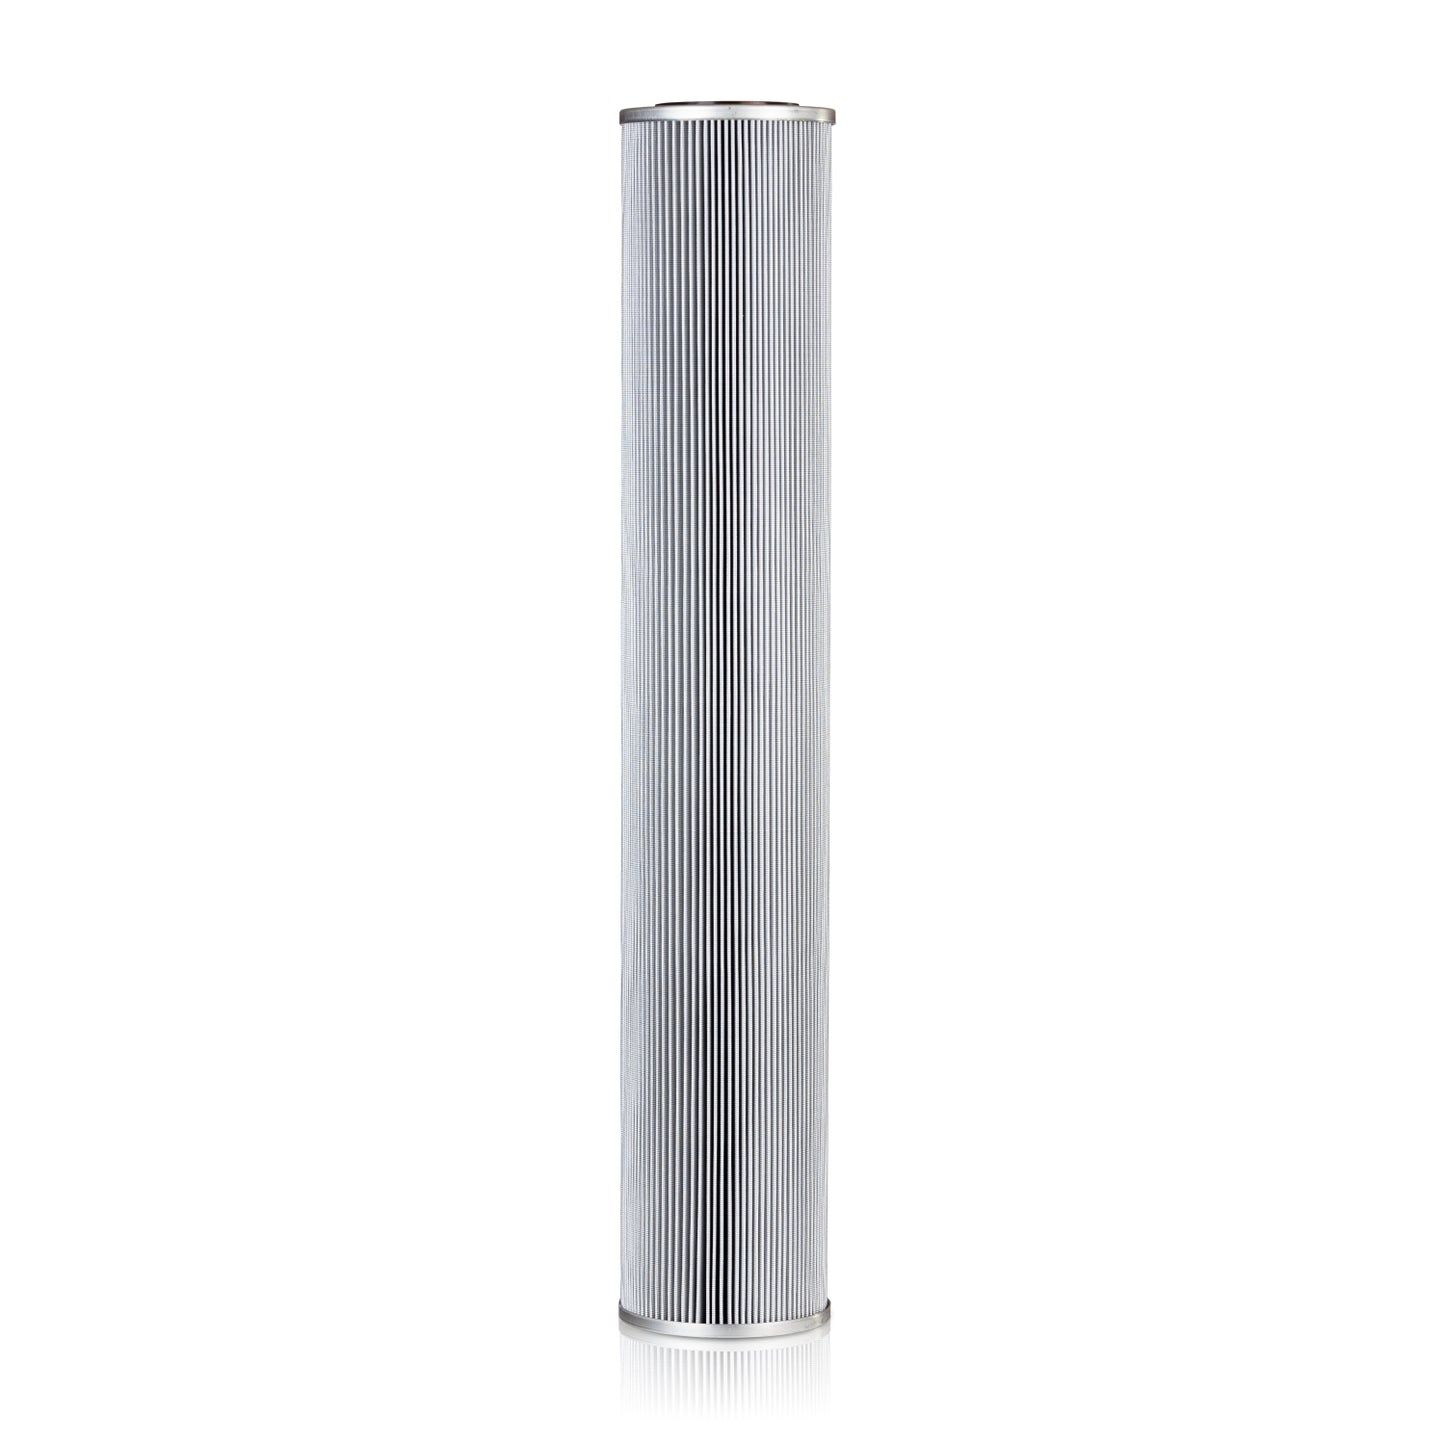 Cartridge Filter Element SF0101-34-1UM 1 Micron Microglass